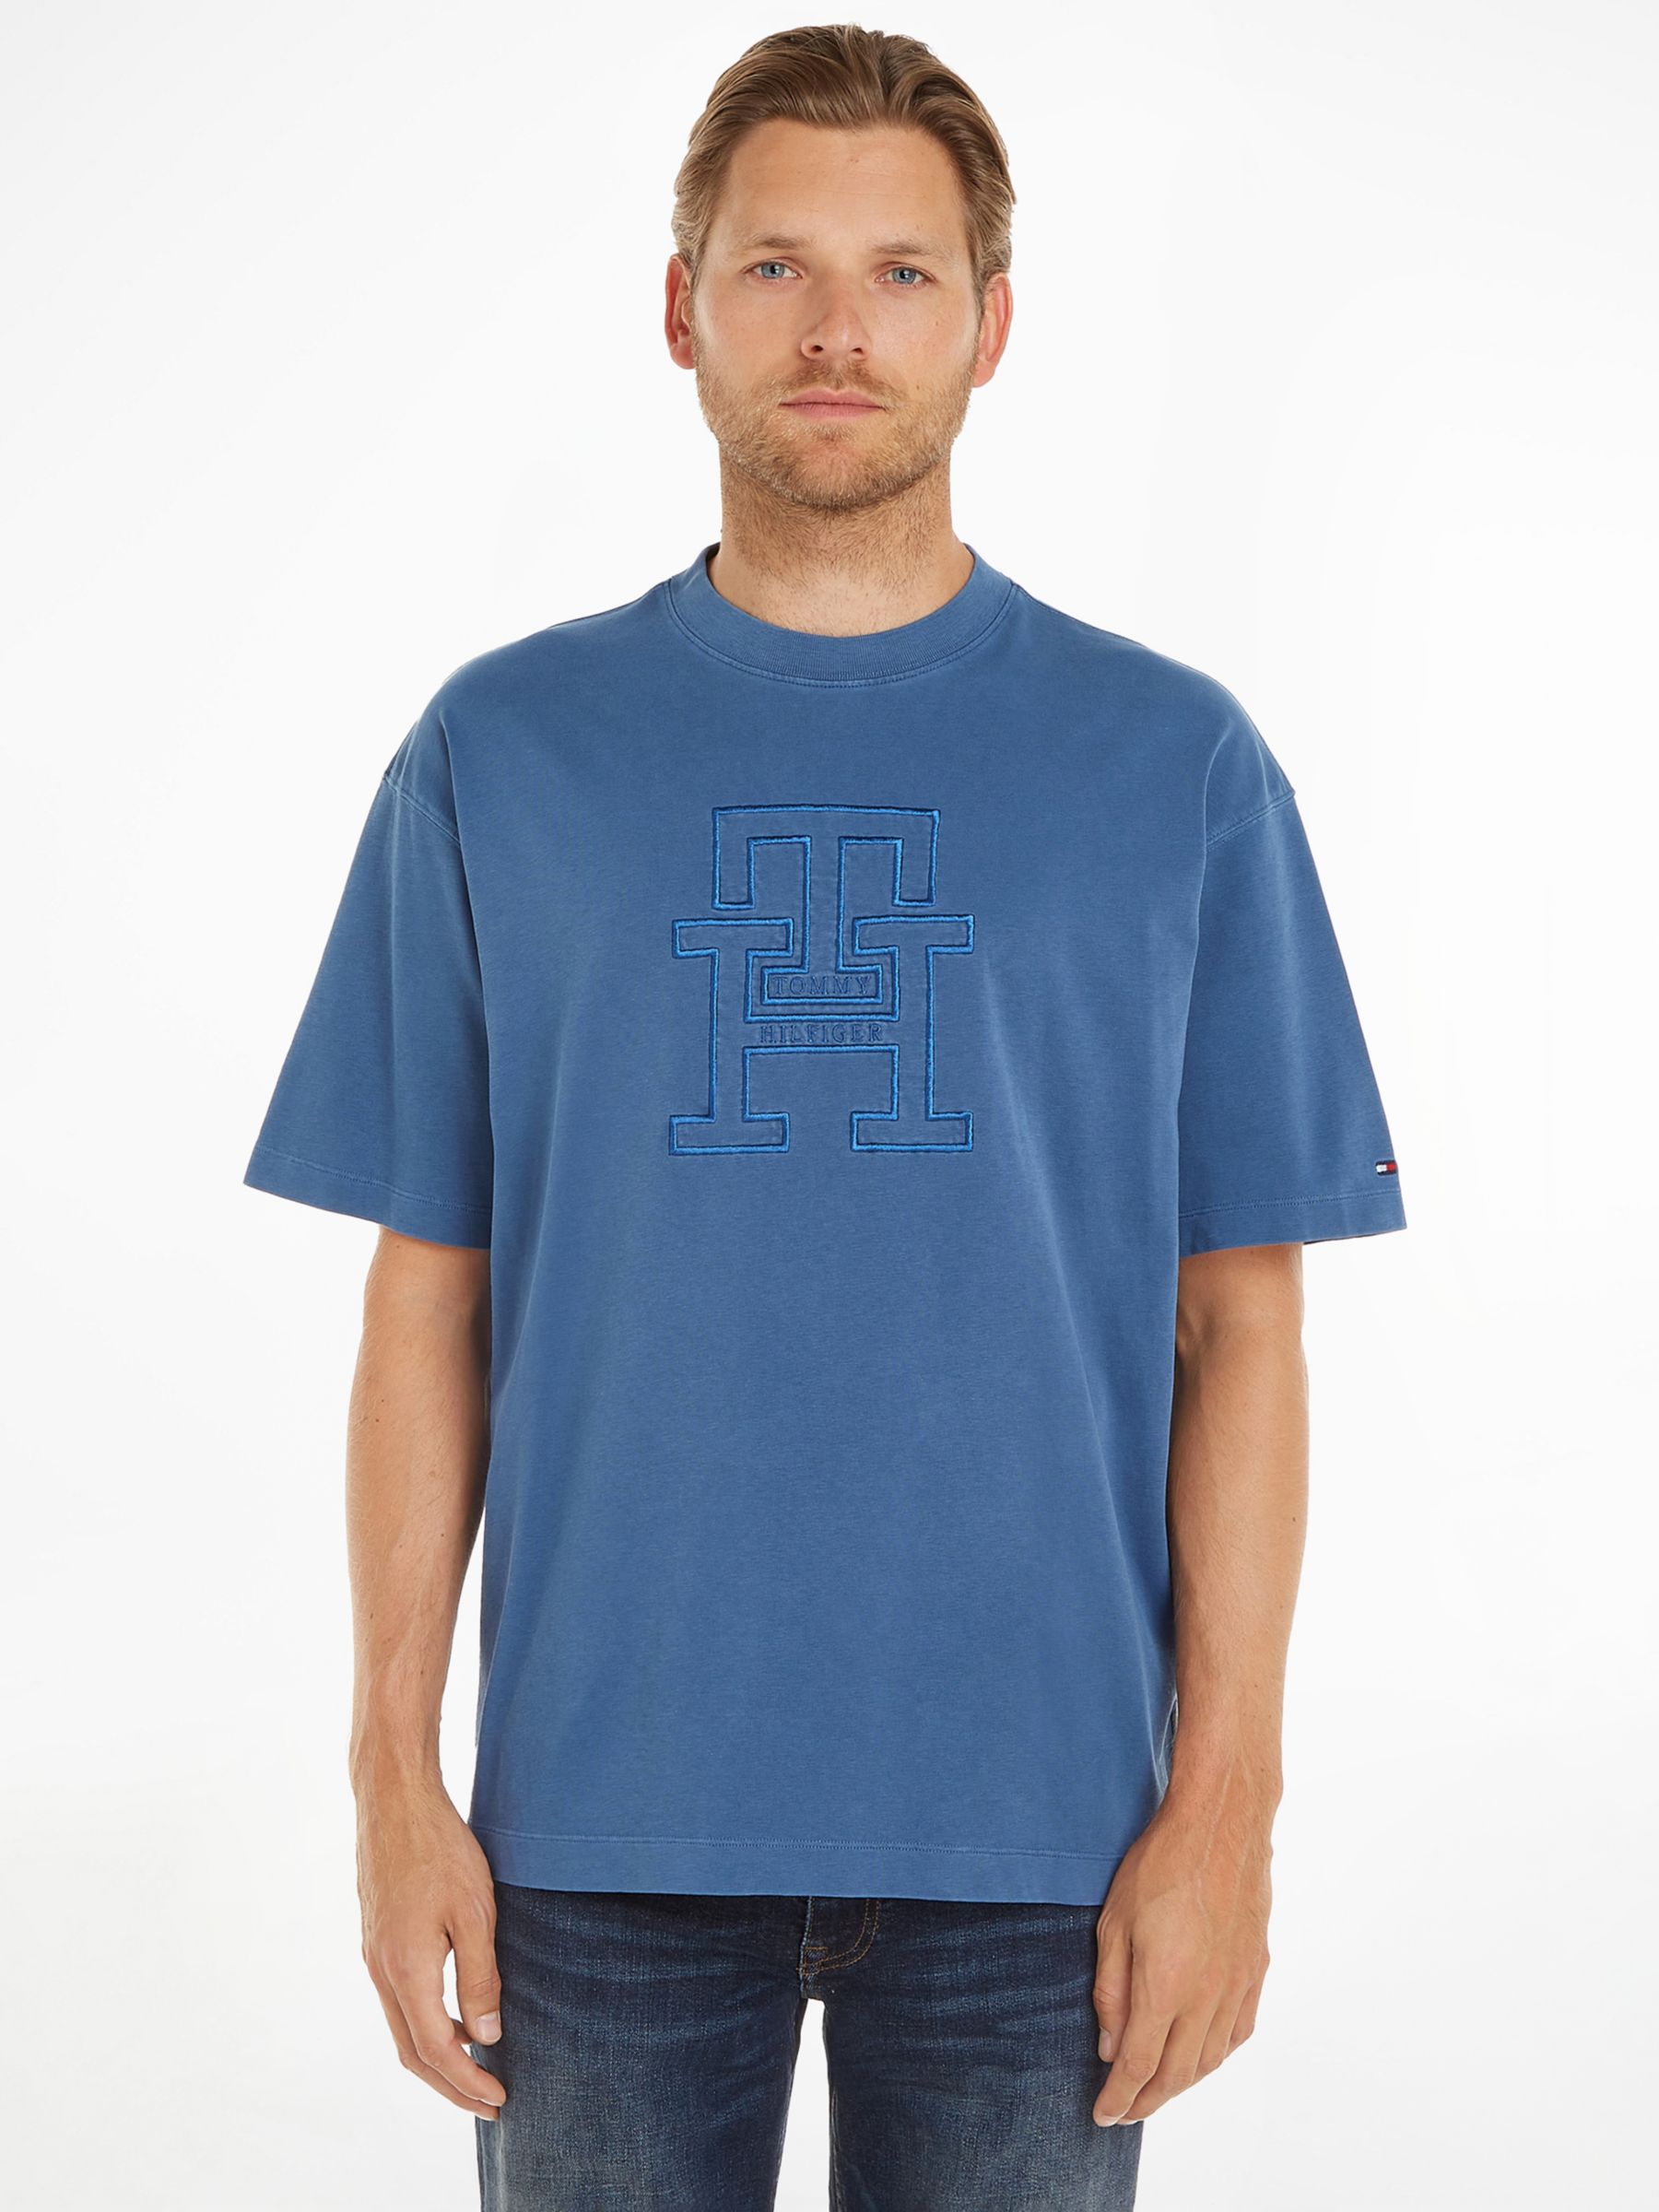 Tommy Hilfiger Garment Dyed T-Shirt, Blue Coast, S